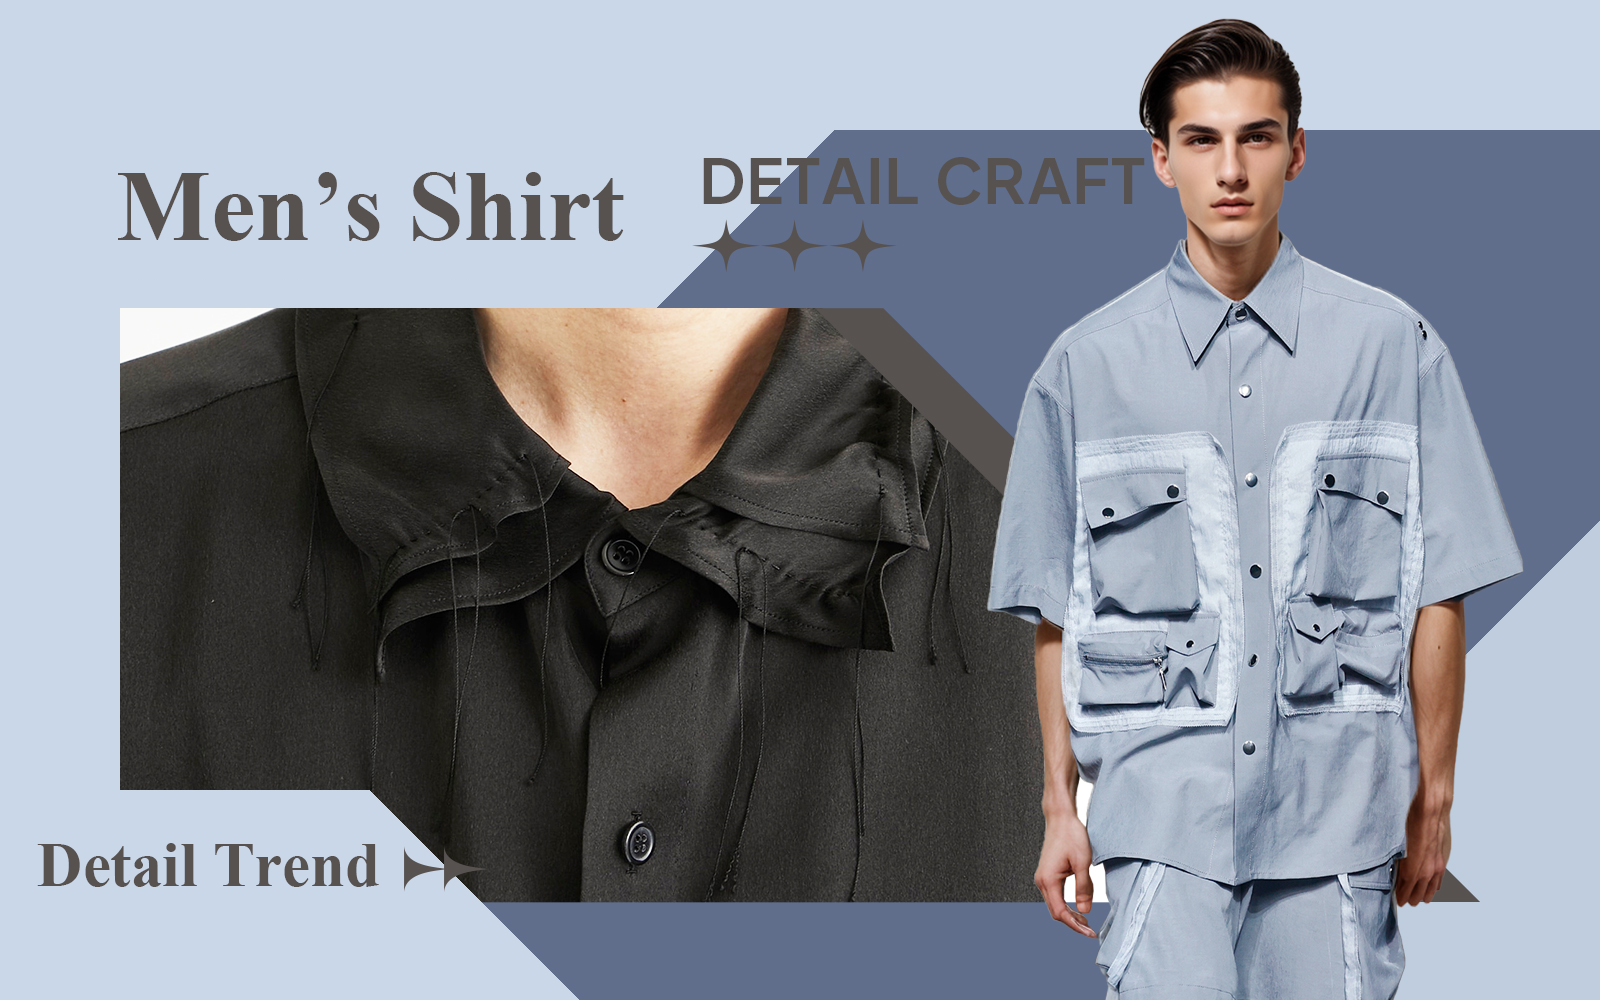 Partial Design -- The Detail & Craft Trend for Men's Shirt